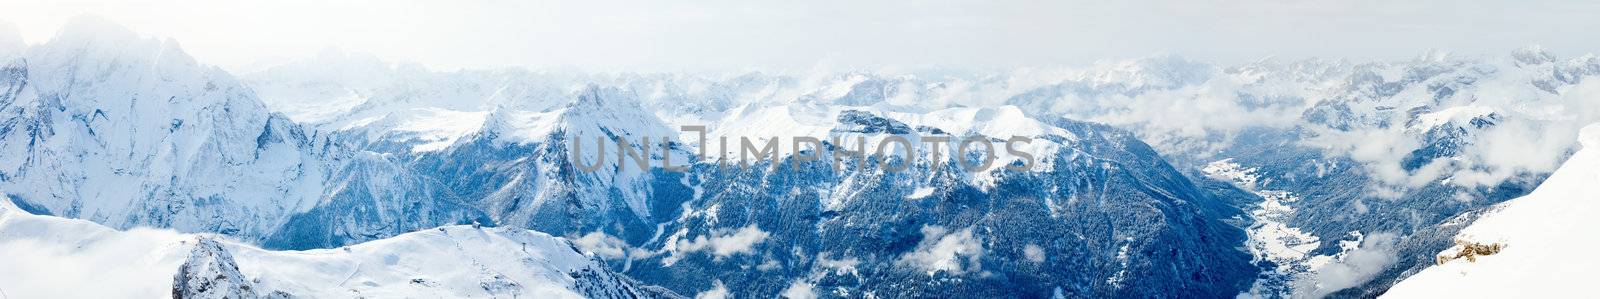 Winter mountains panorama by naumoid